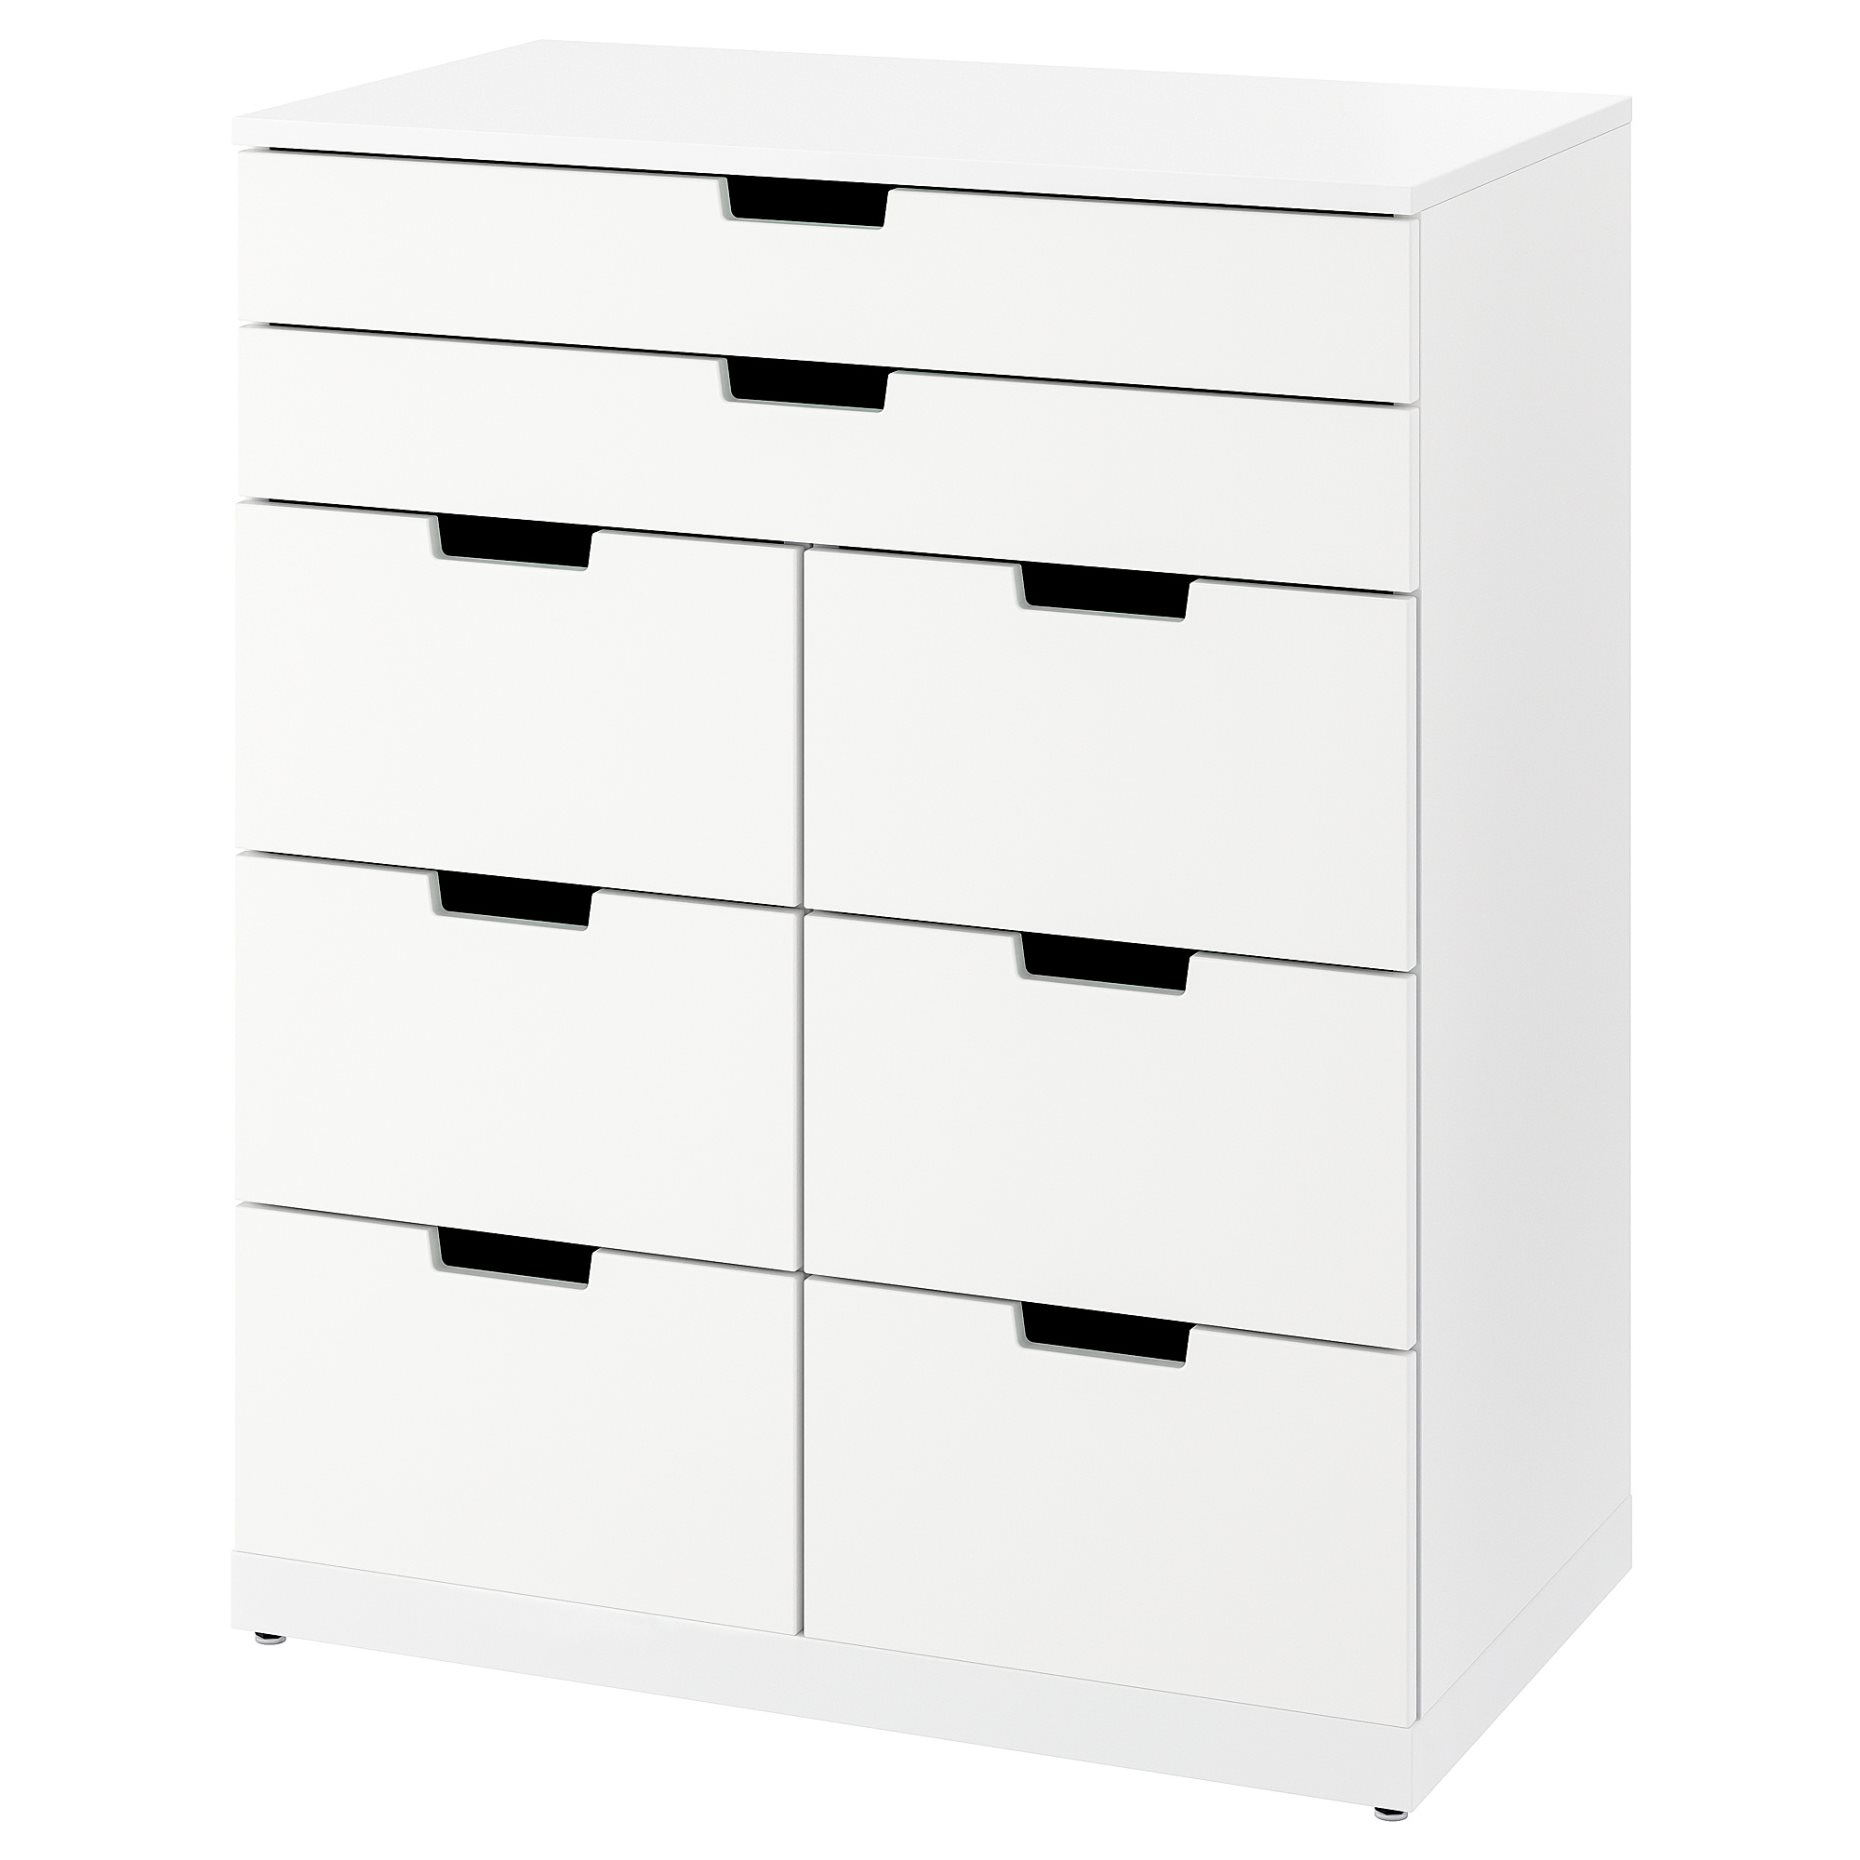 NORDLI, chest of 8 drawers, 80x99 cm, 693.368.87